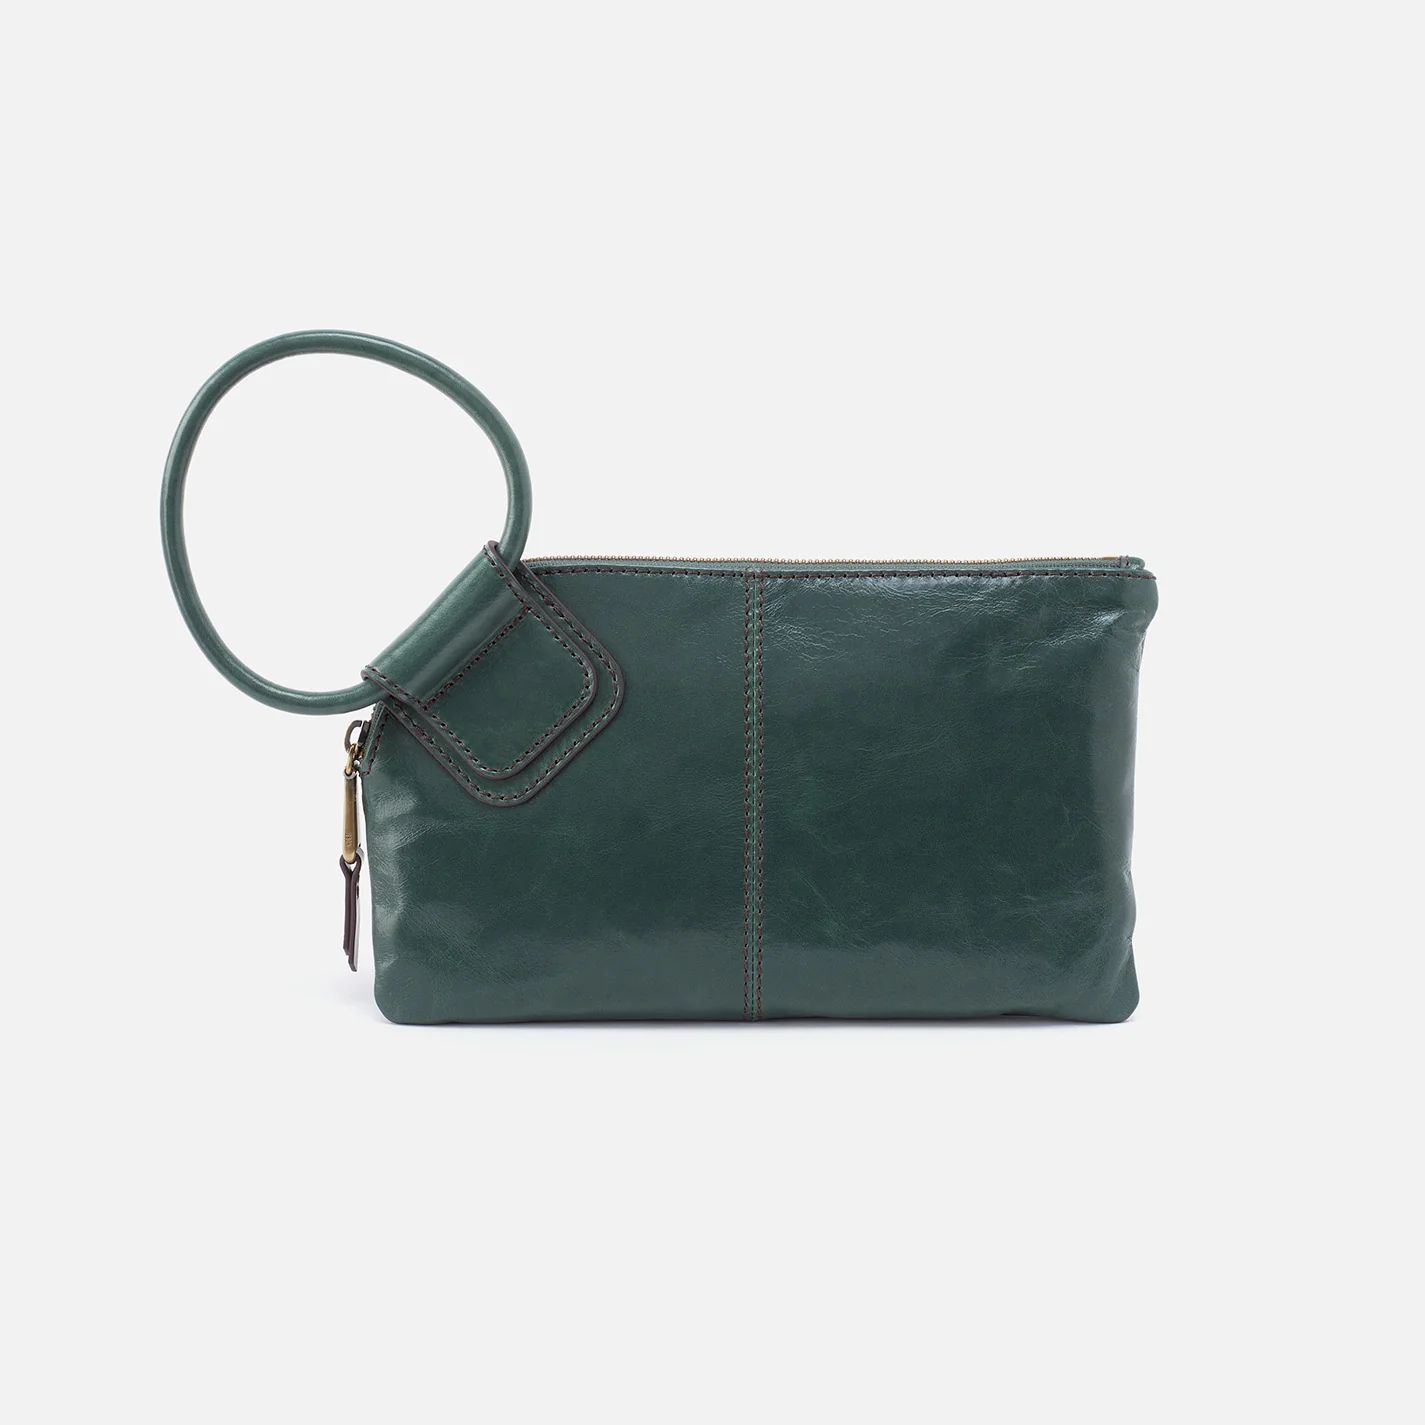 Sable Wristlet in Polished Leather - Sage Leaf | HOBO Bags